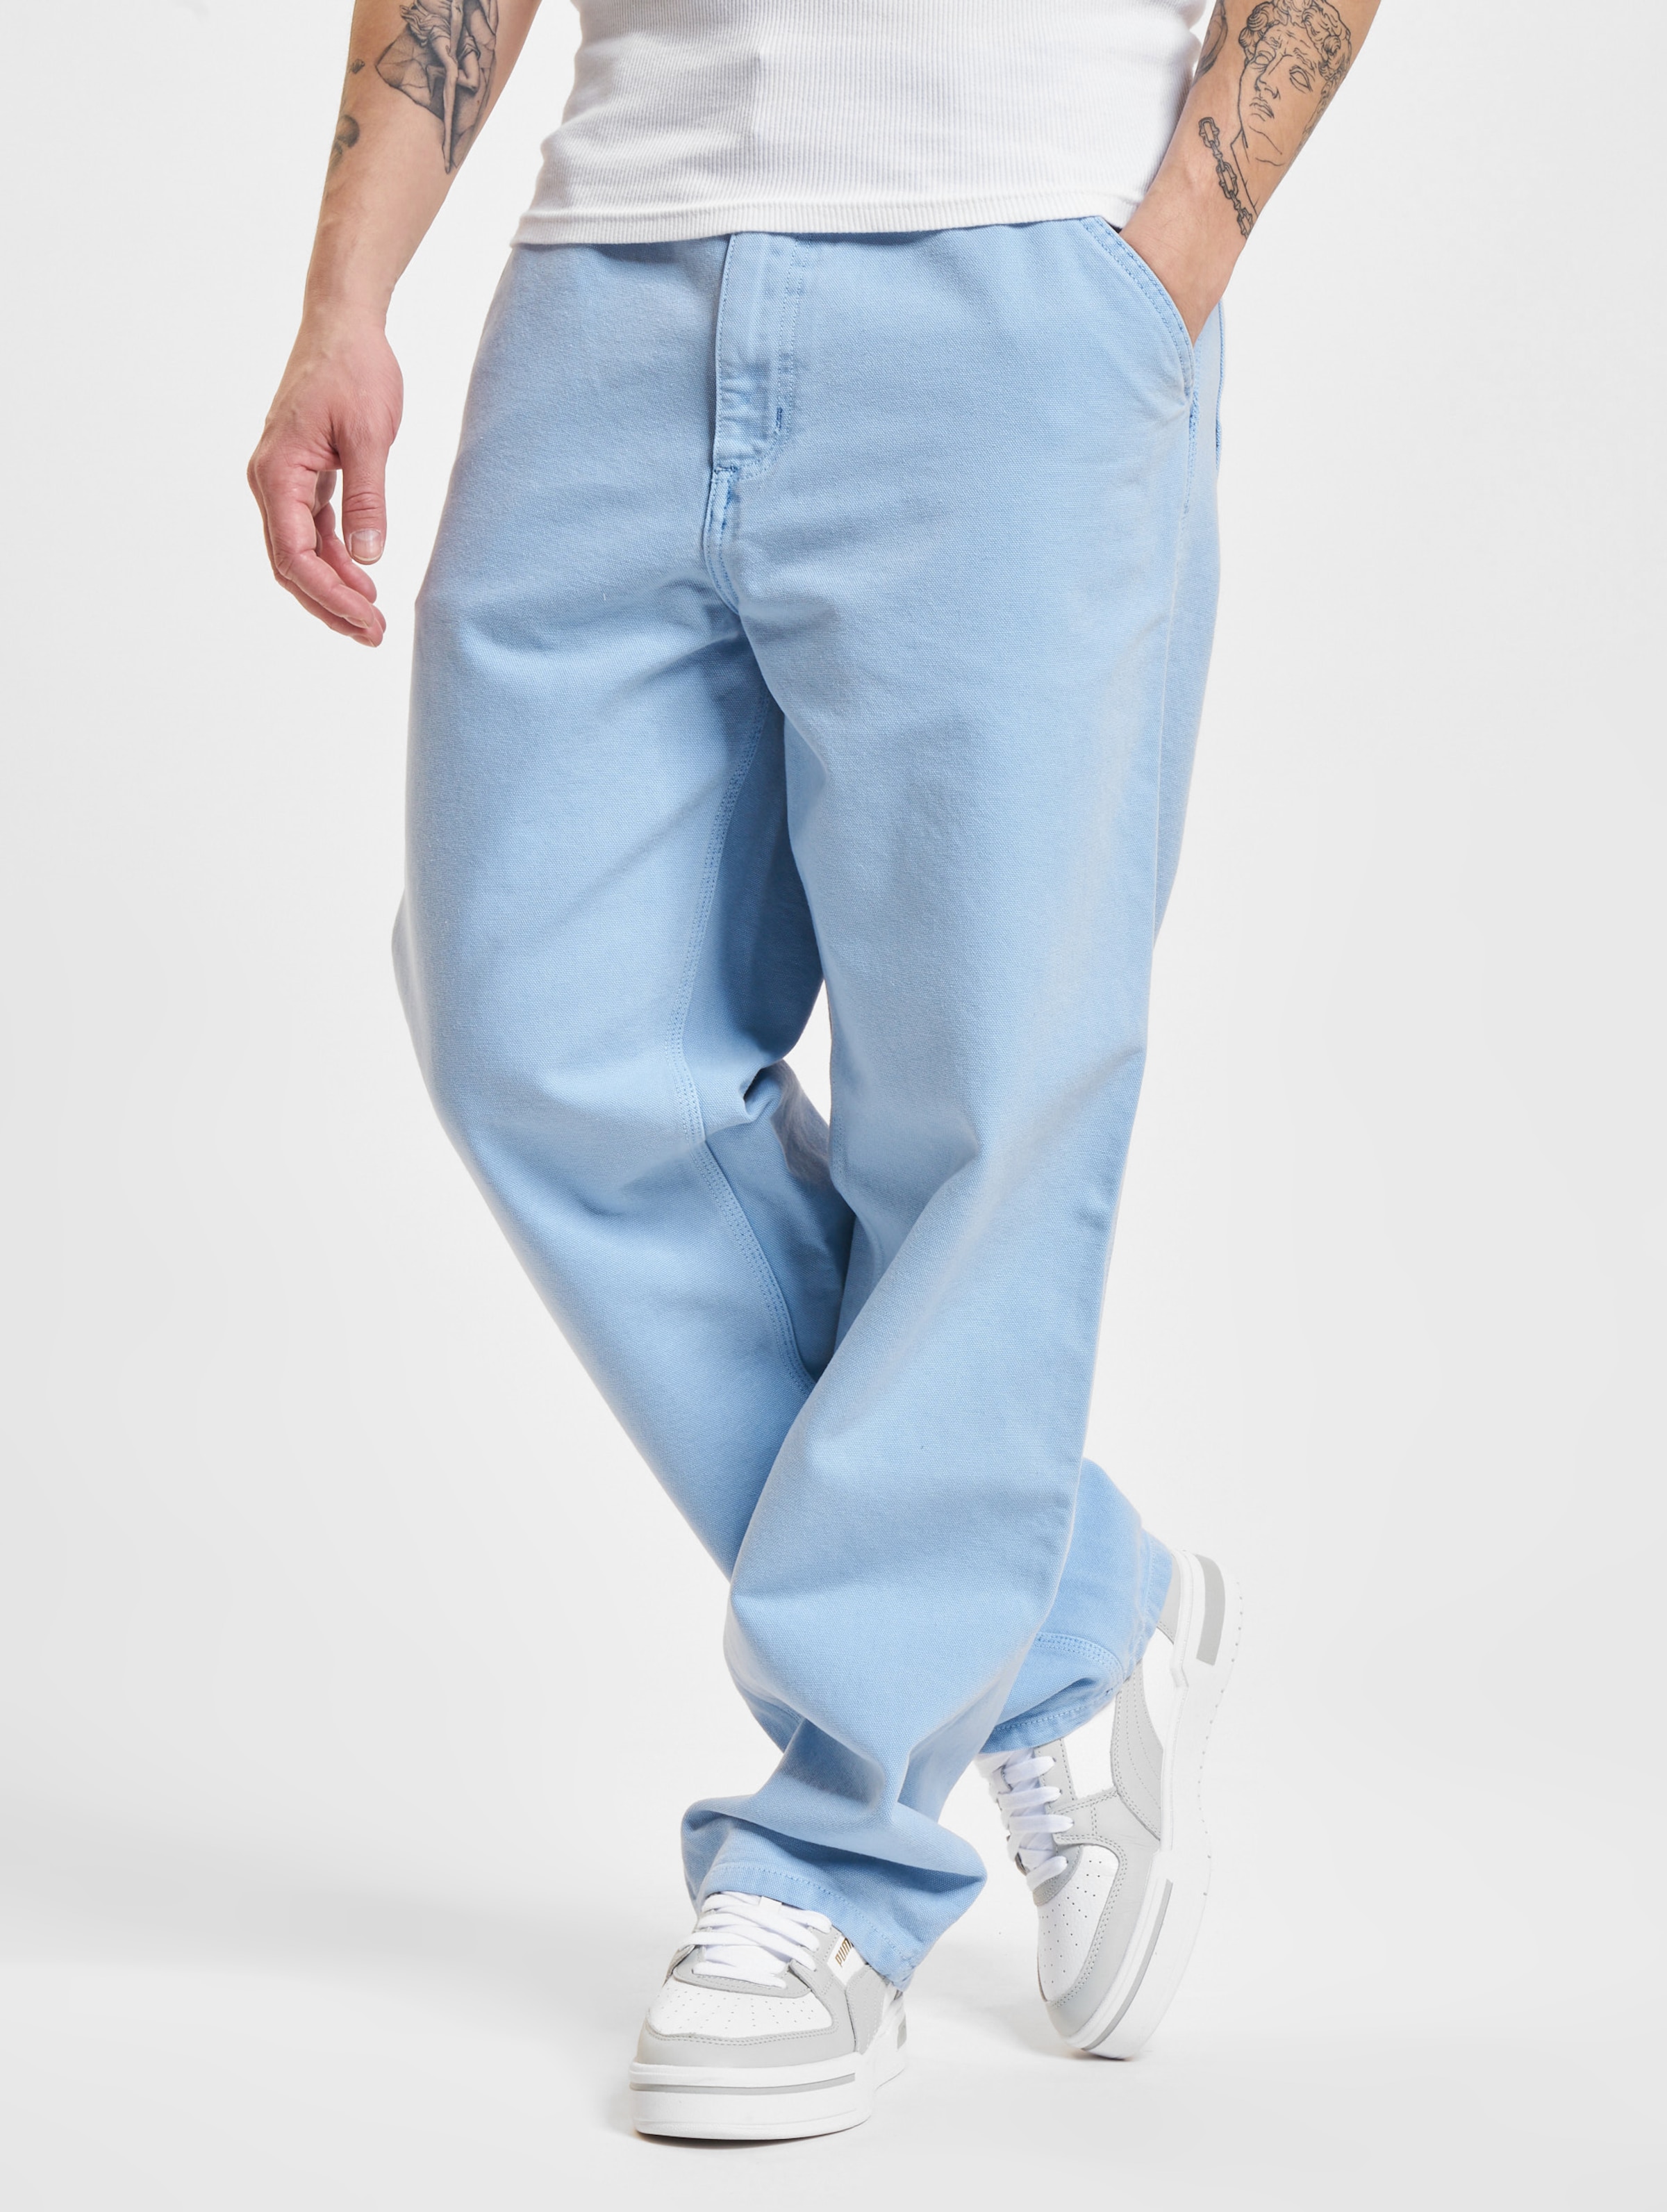 Carhartt WIP Simple Jeans Mannen op kleur blauw, Maat 3032